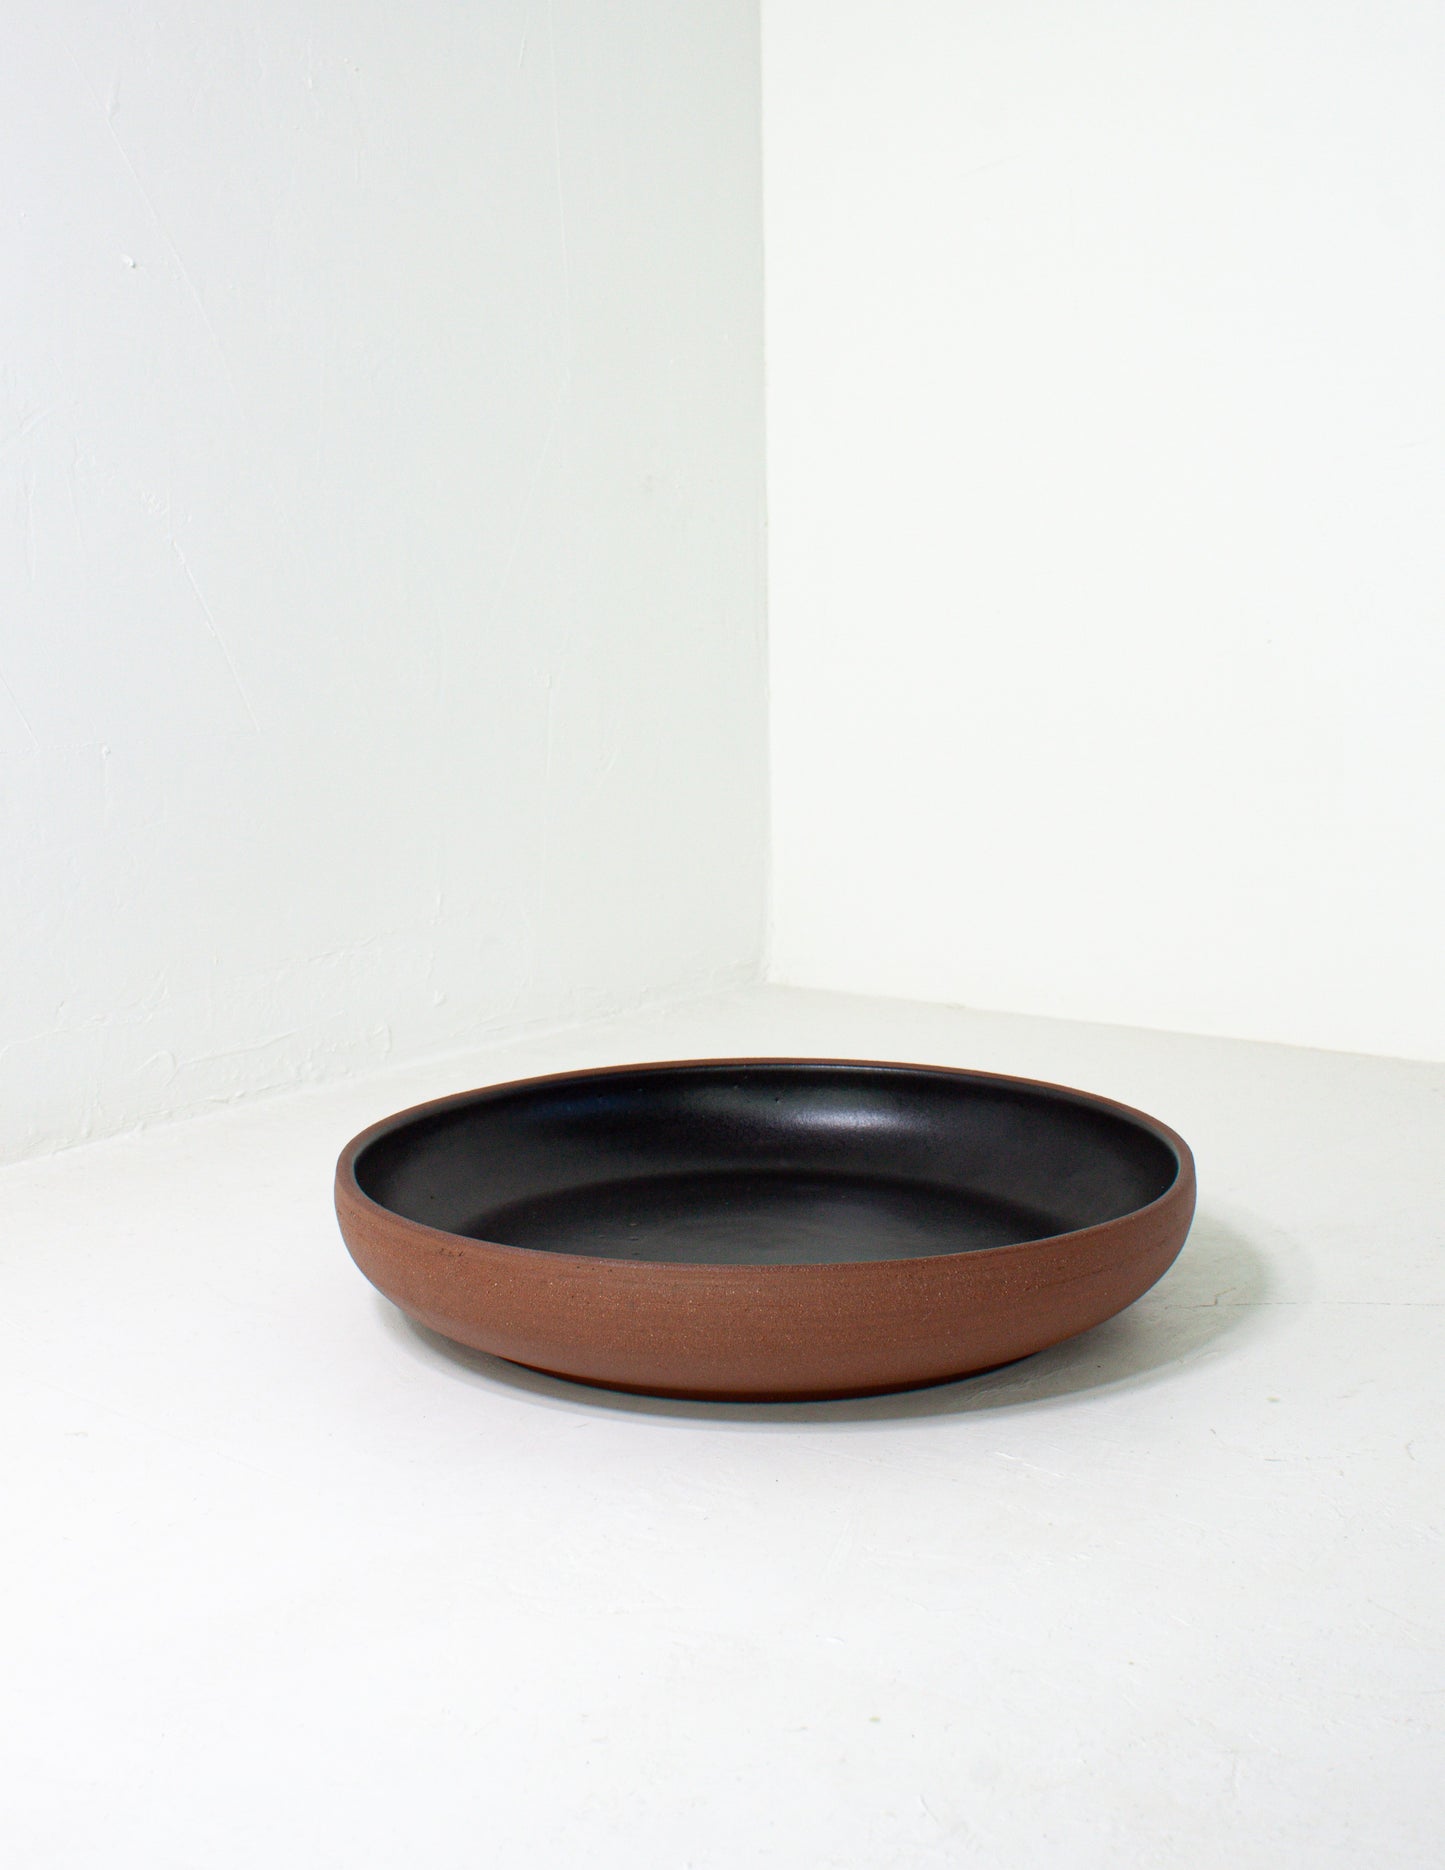 handmade ceramic serving platter in a black glaze